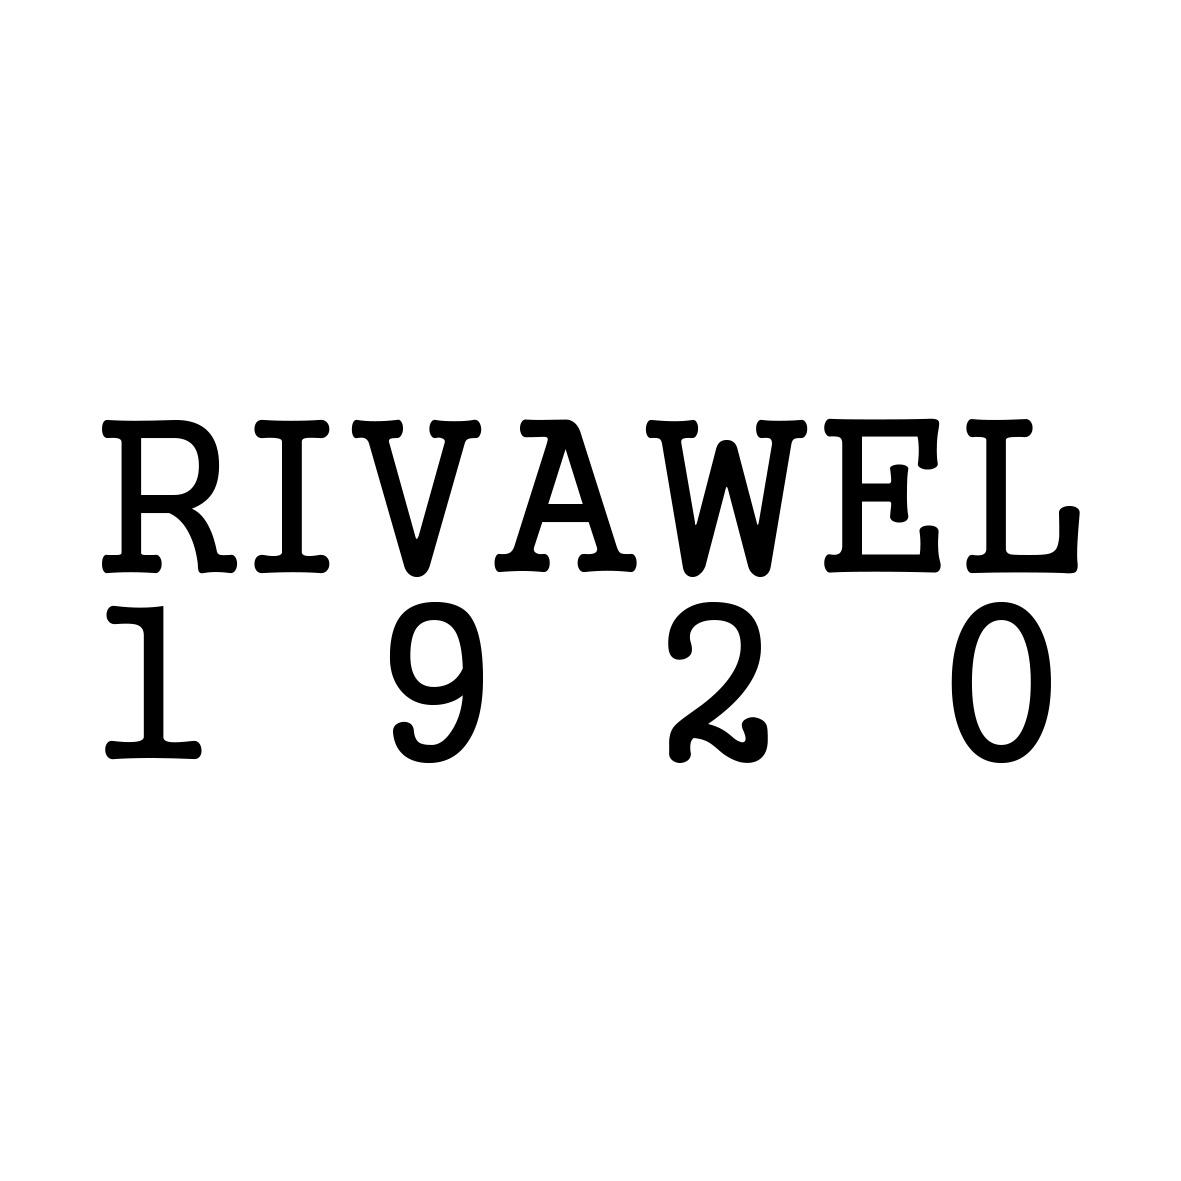 RIVAWEL 1920